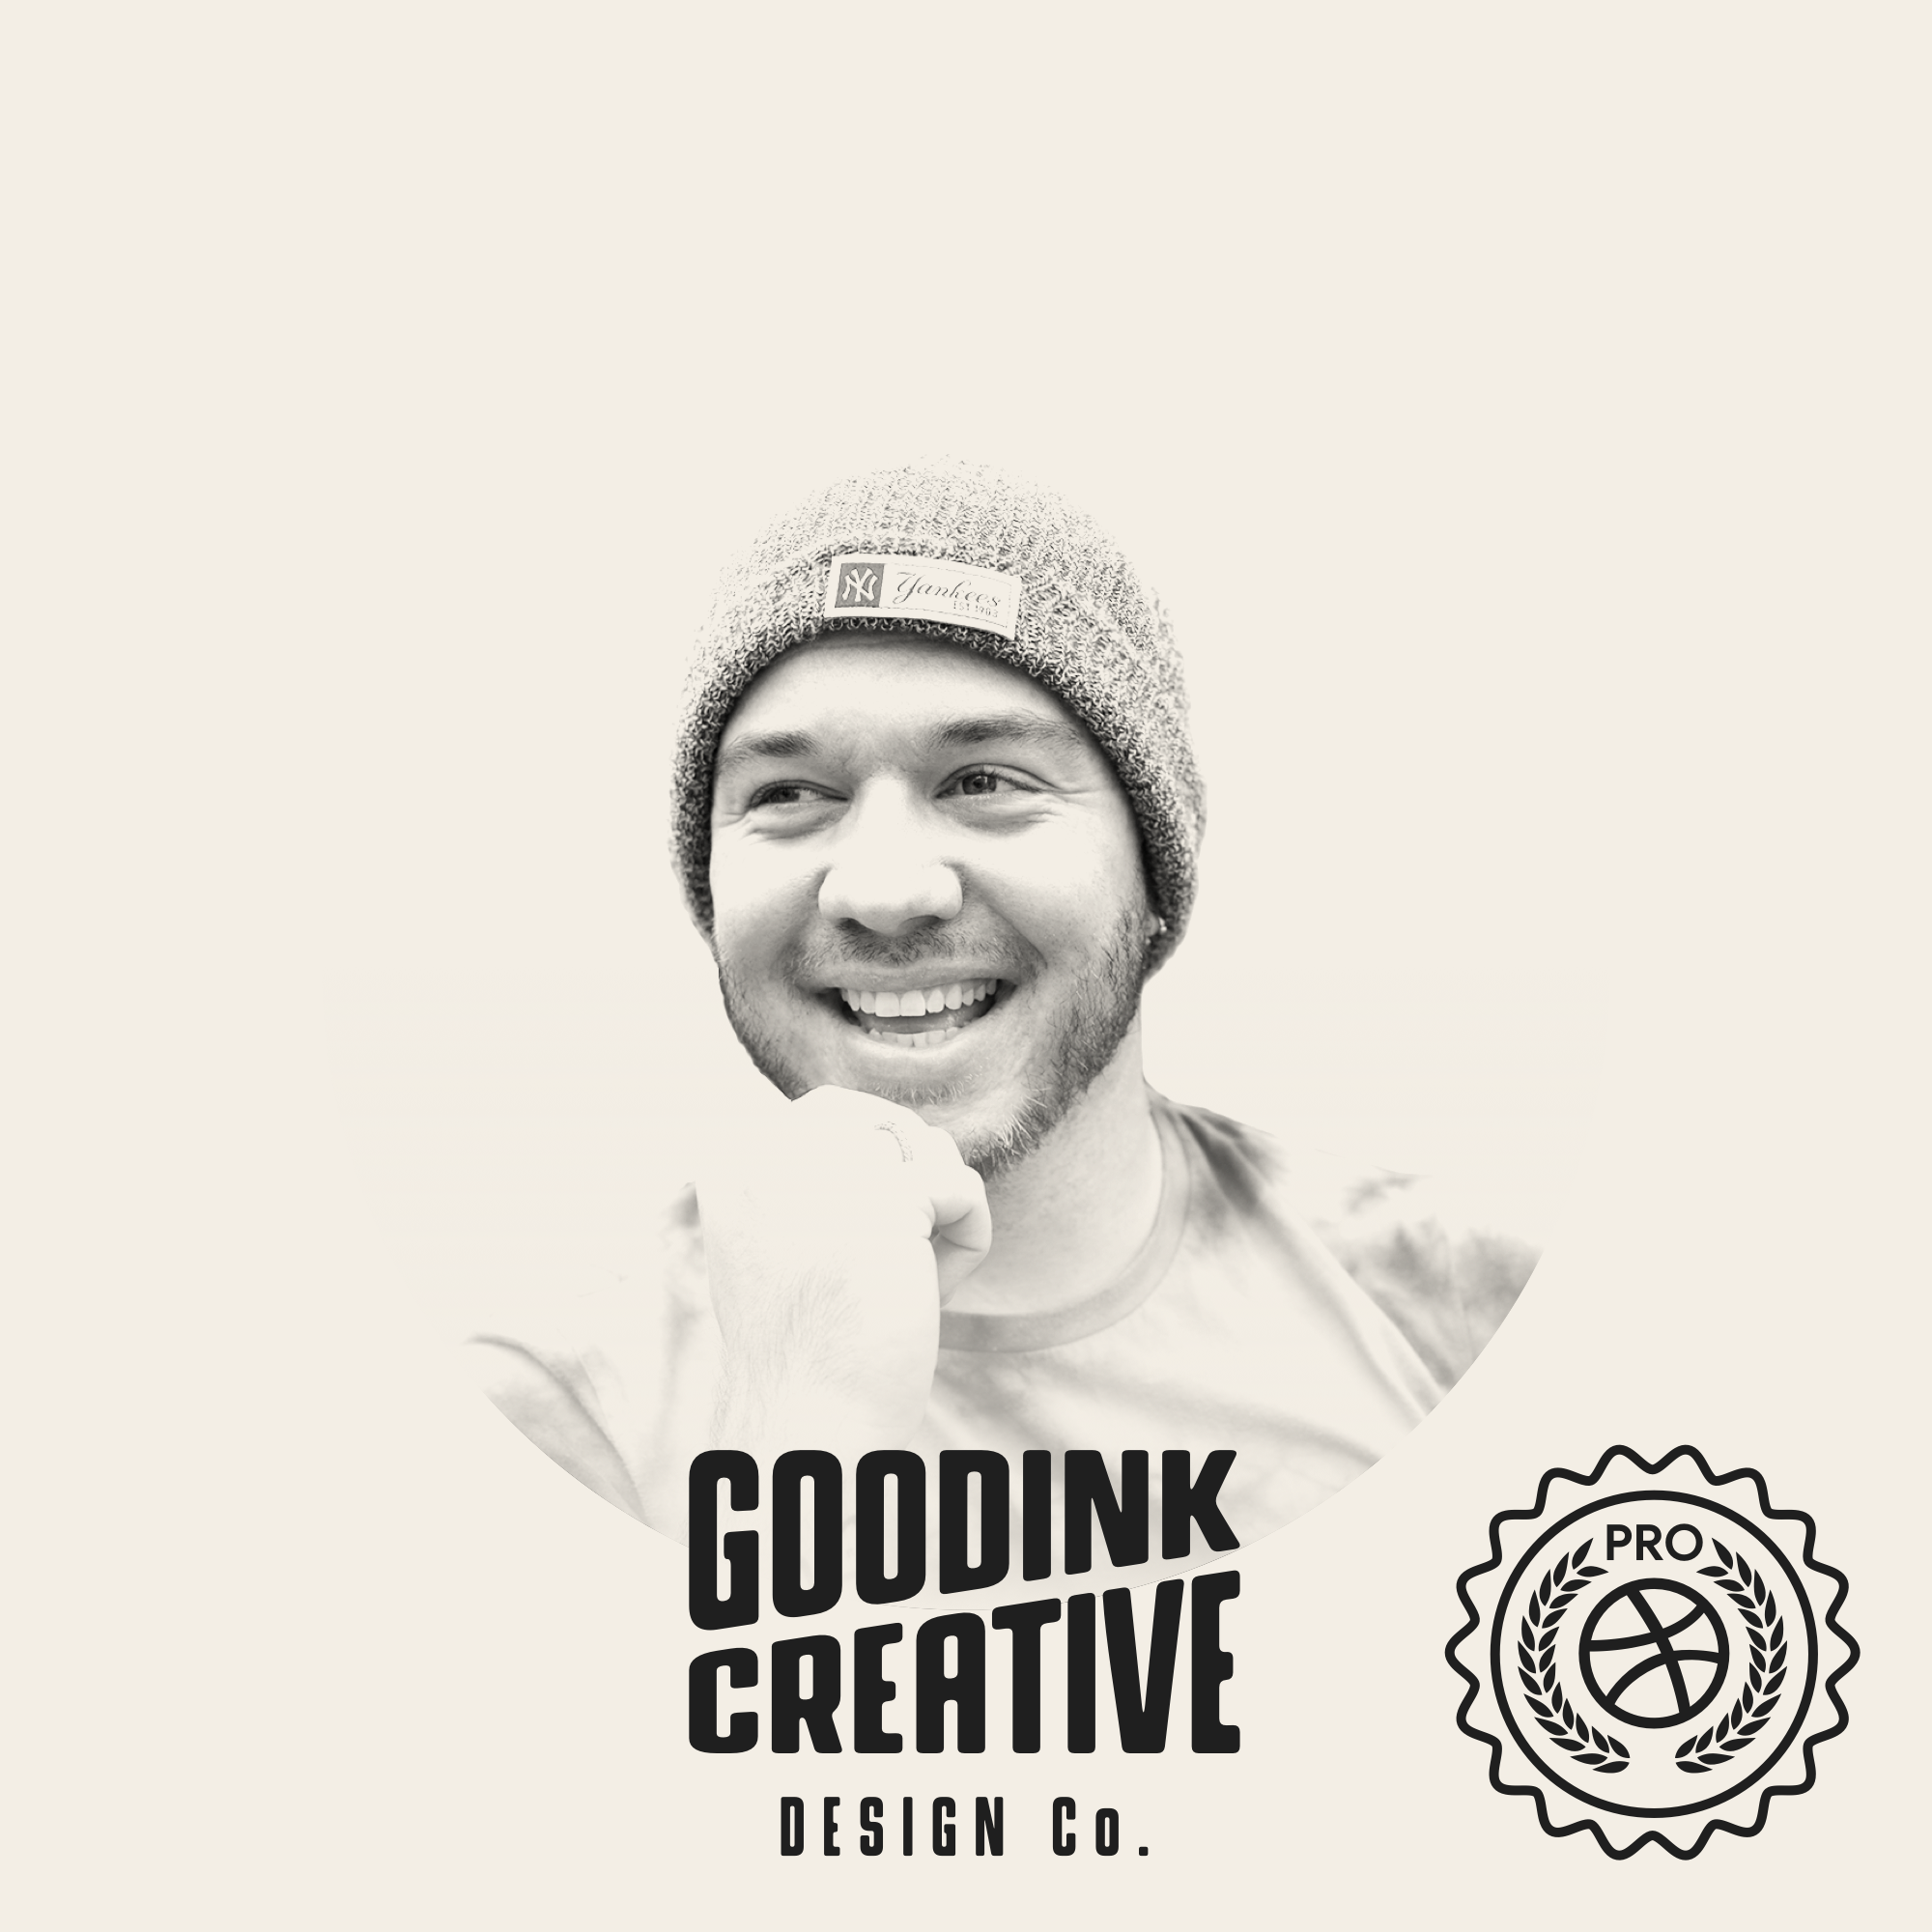 Steve Goodger of GoodInk Design Co.